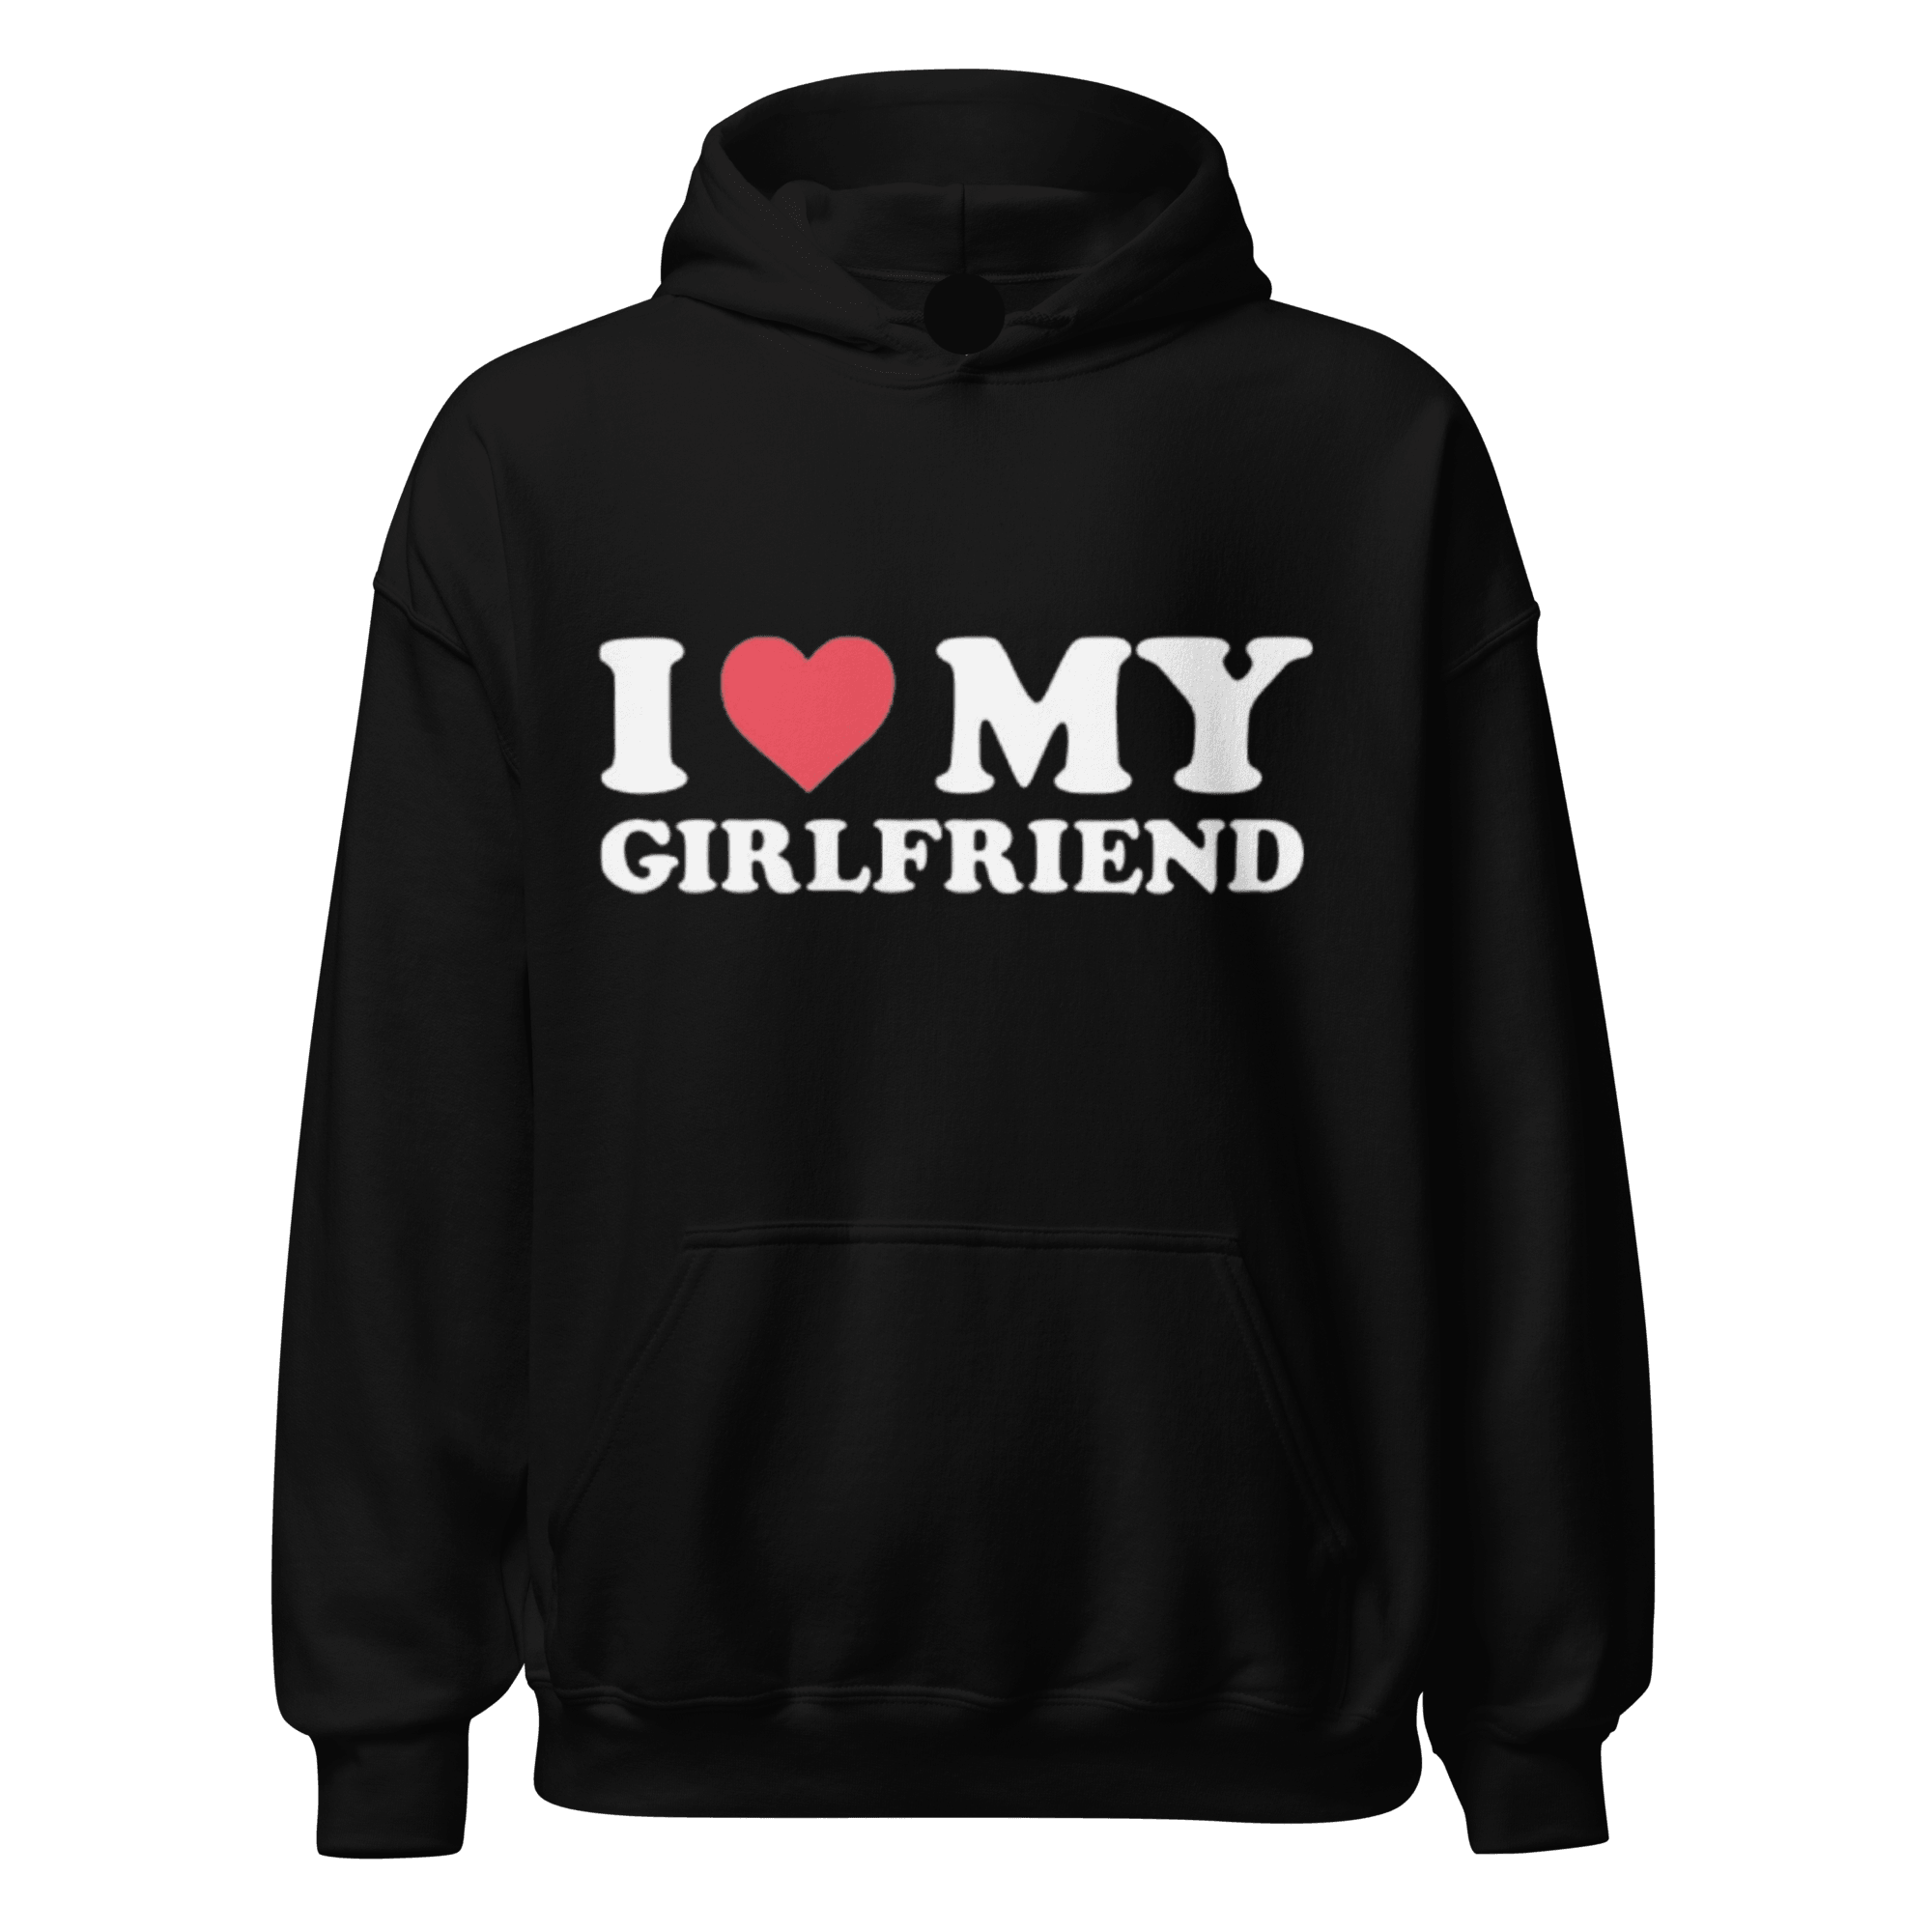 I Love my Boyfreind/Girlfriend Relationship Hoodie set - TopKoalaTee